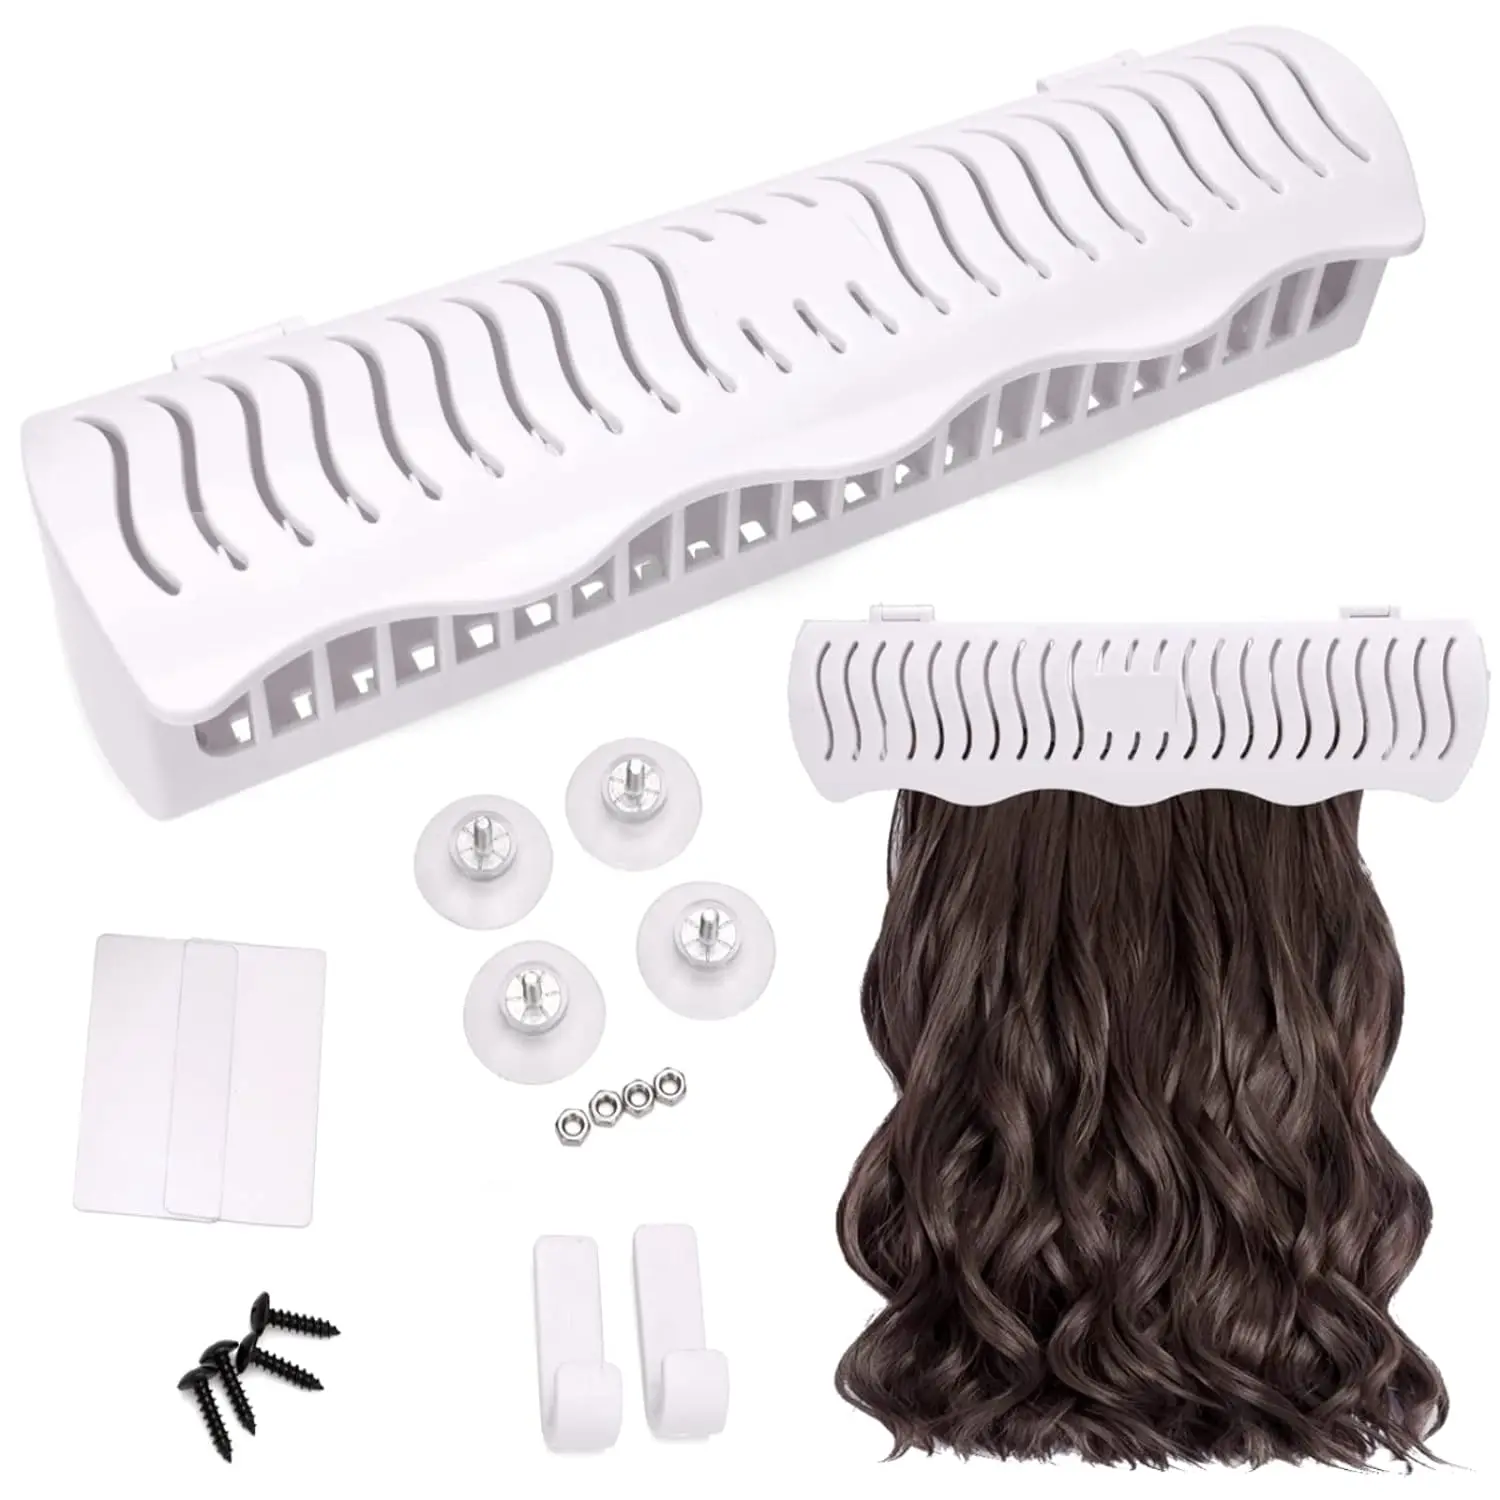 Portable Hair Extension Holder rack Hanger Stand for braiding braids wall